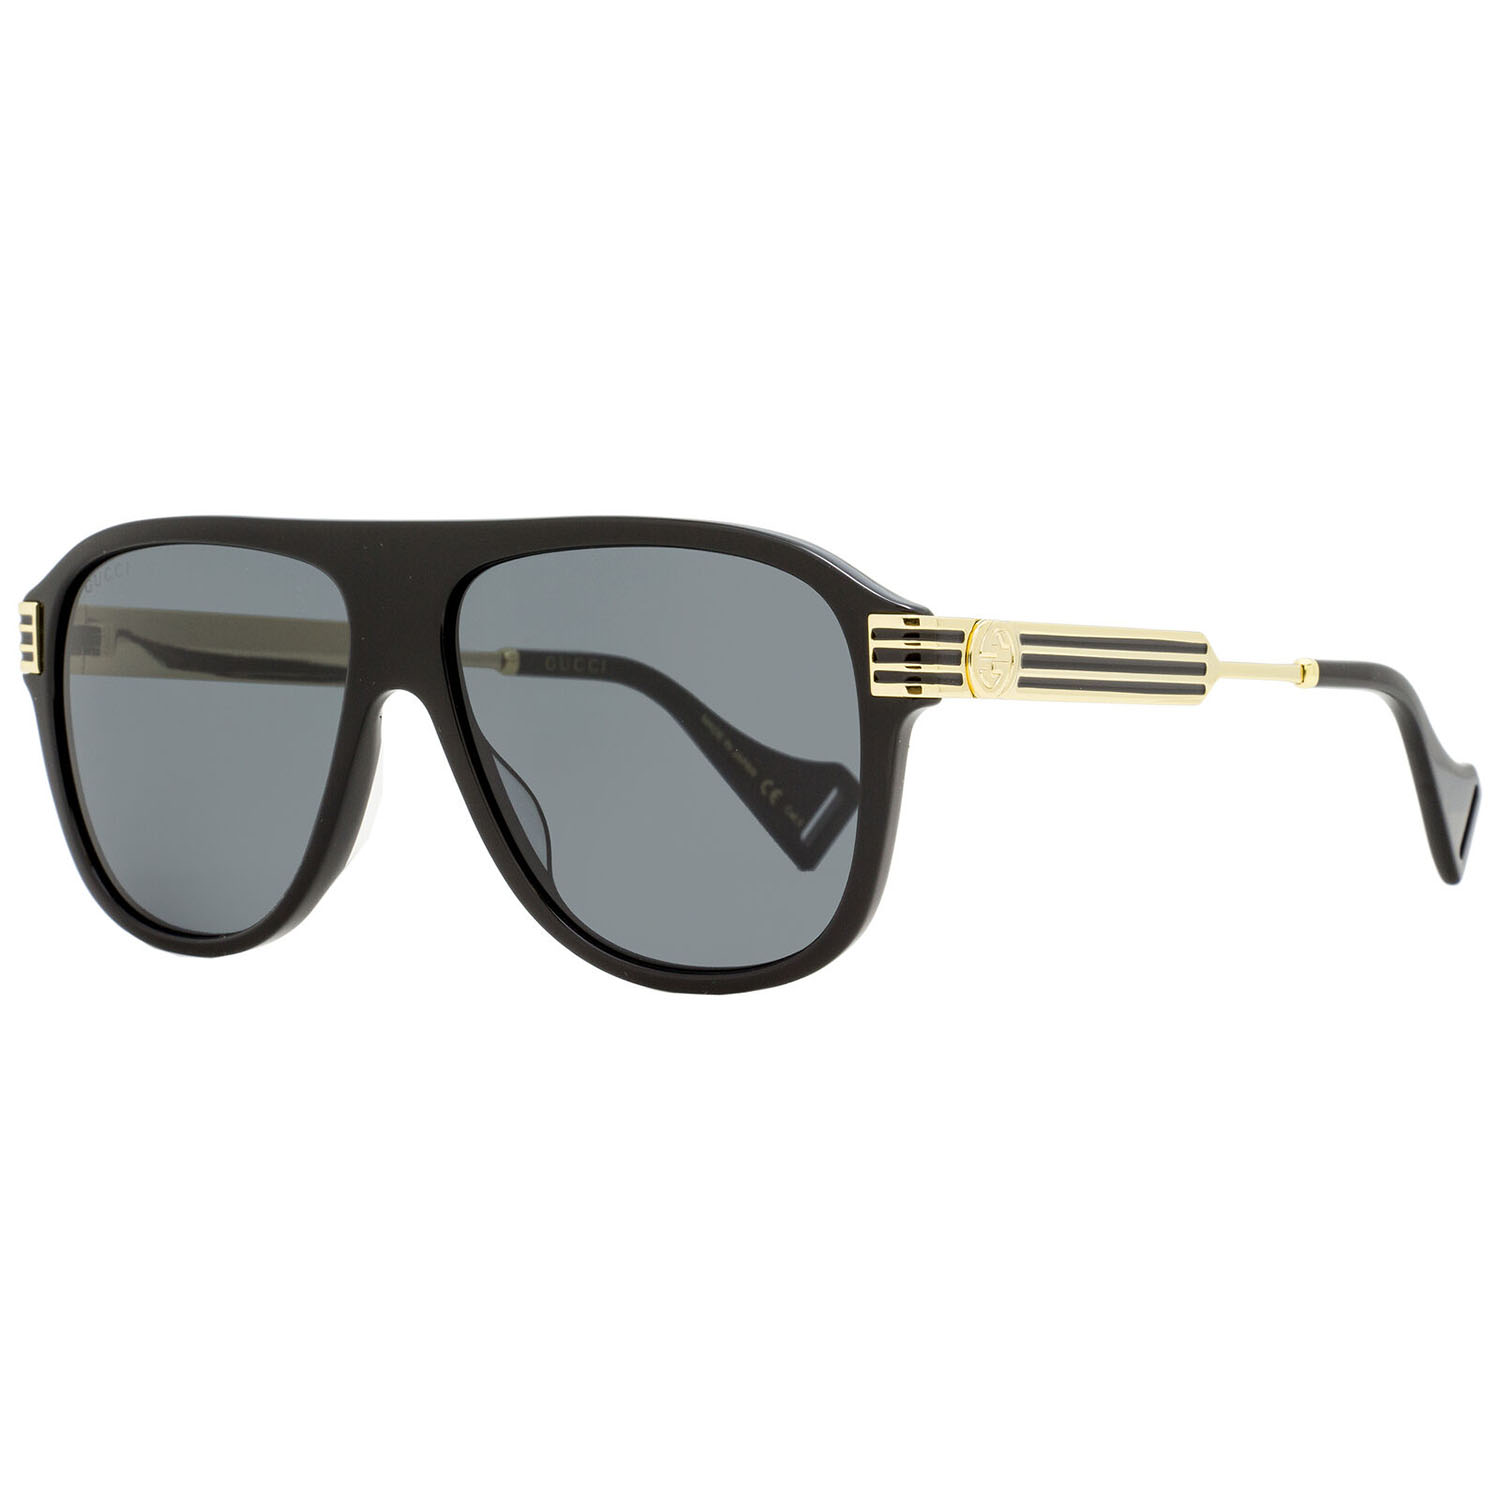 Gucci GG0587s 001 Black & Gold Unisex Sunglasses - See My Glasses